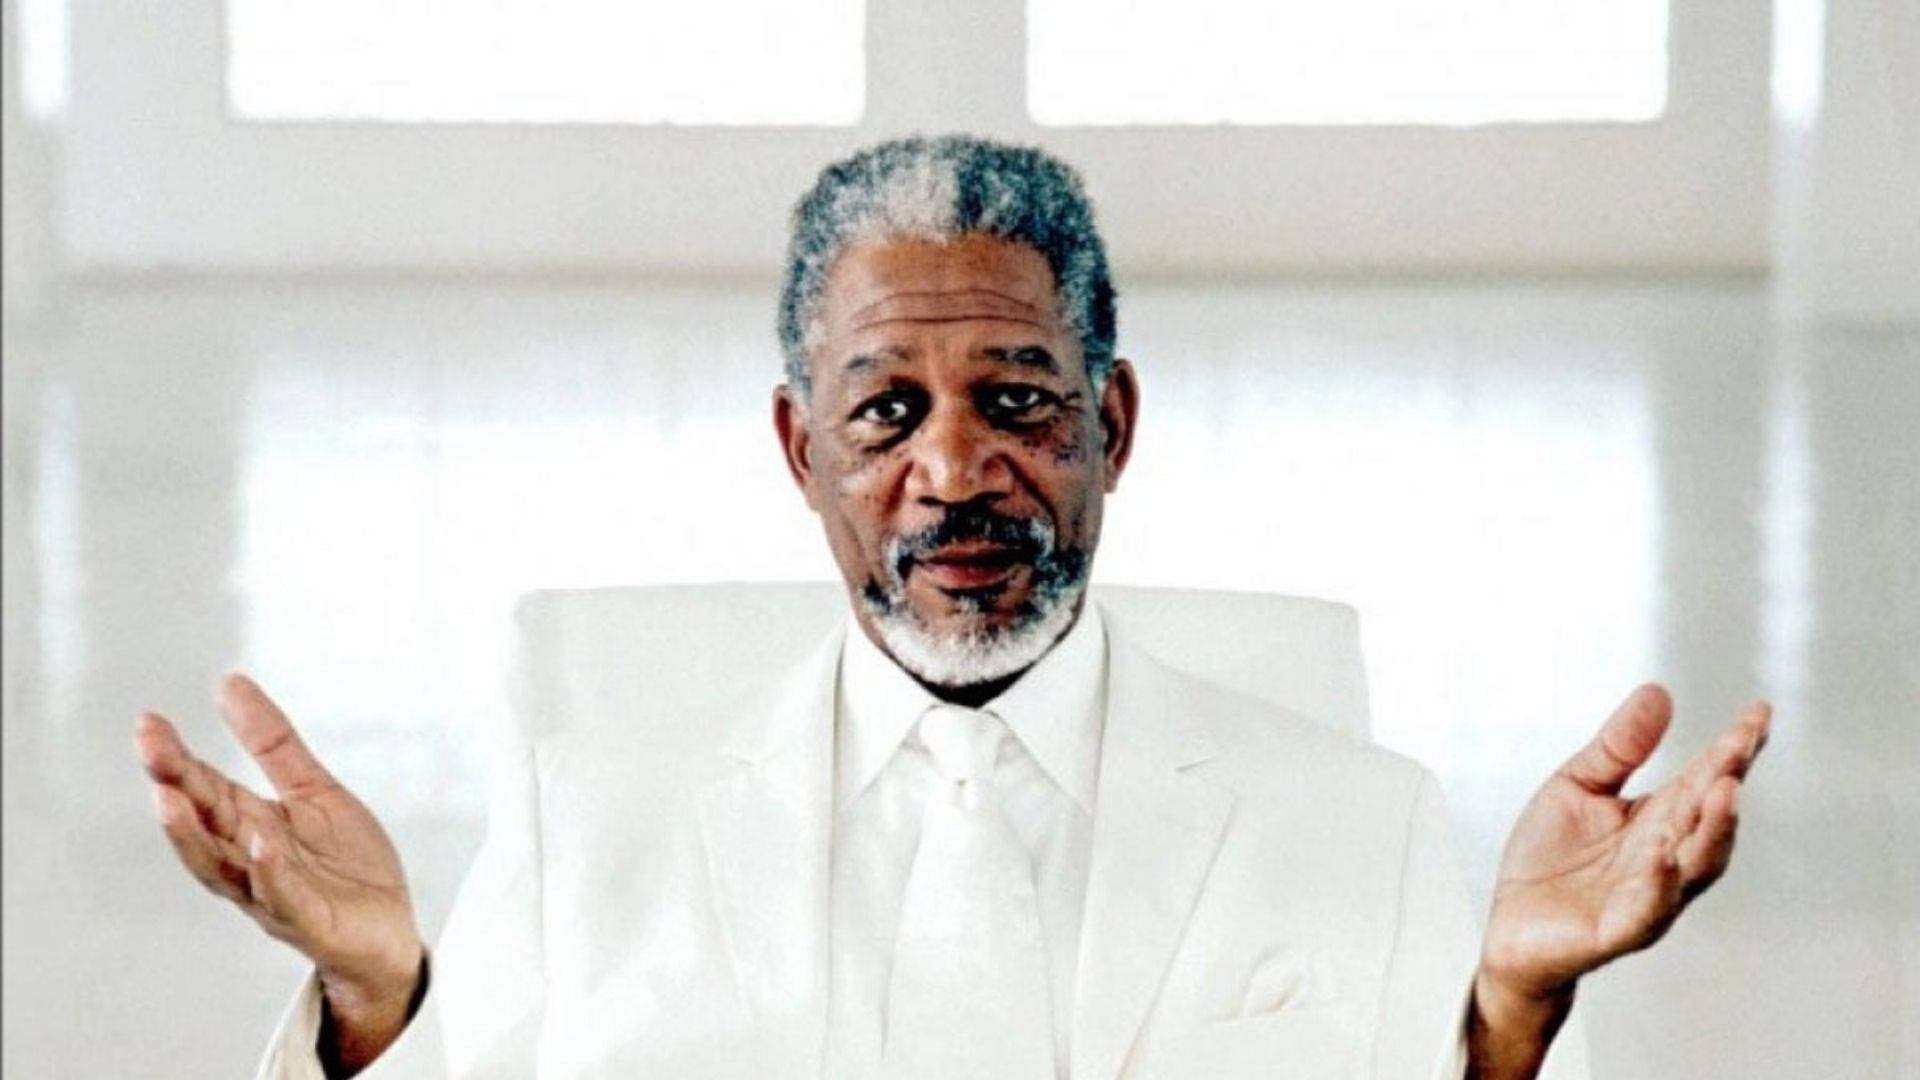 Morgan Freeman In White Suit Background